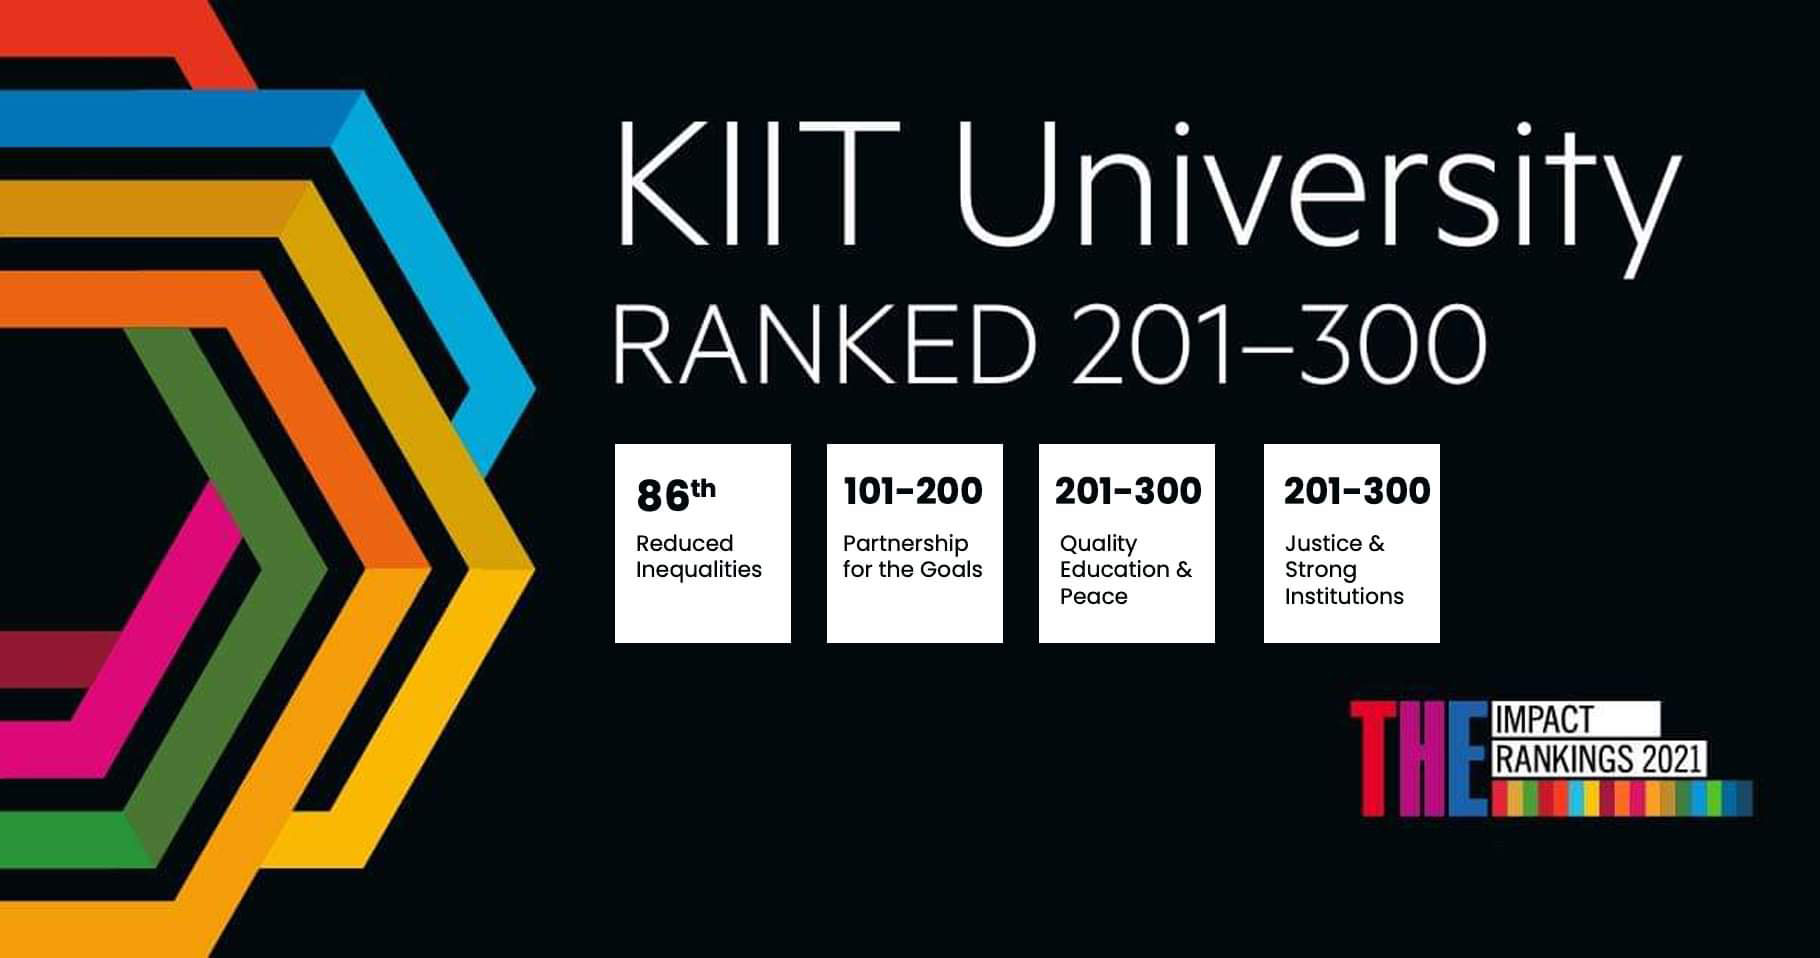 KIIT University Time Higher Education Impacts Ranking 2021